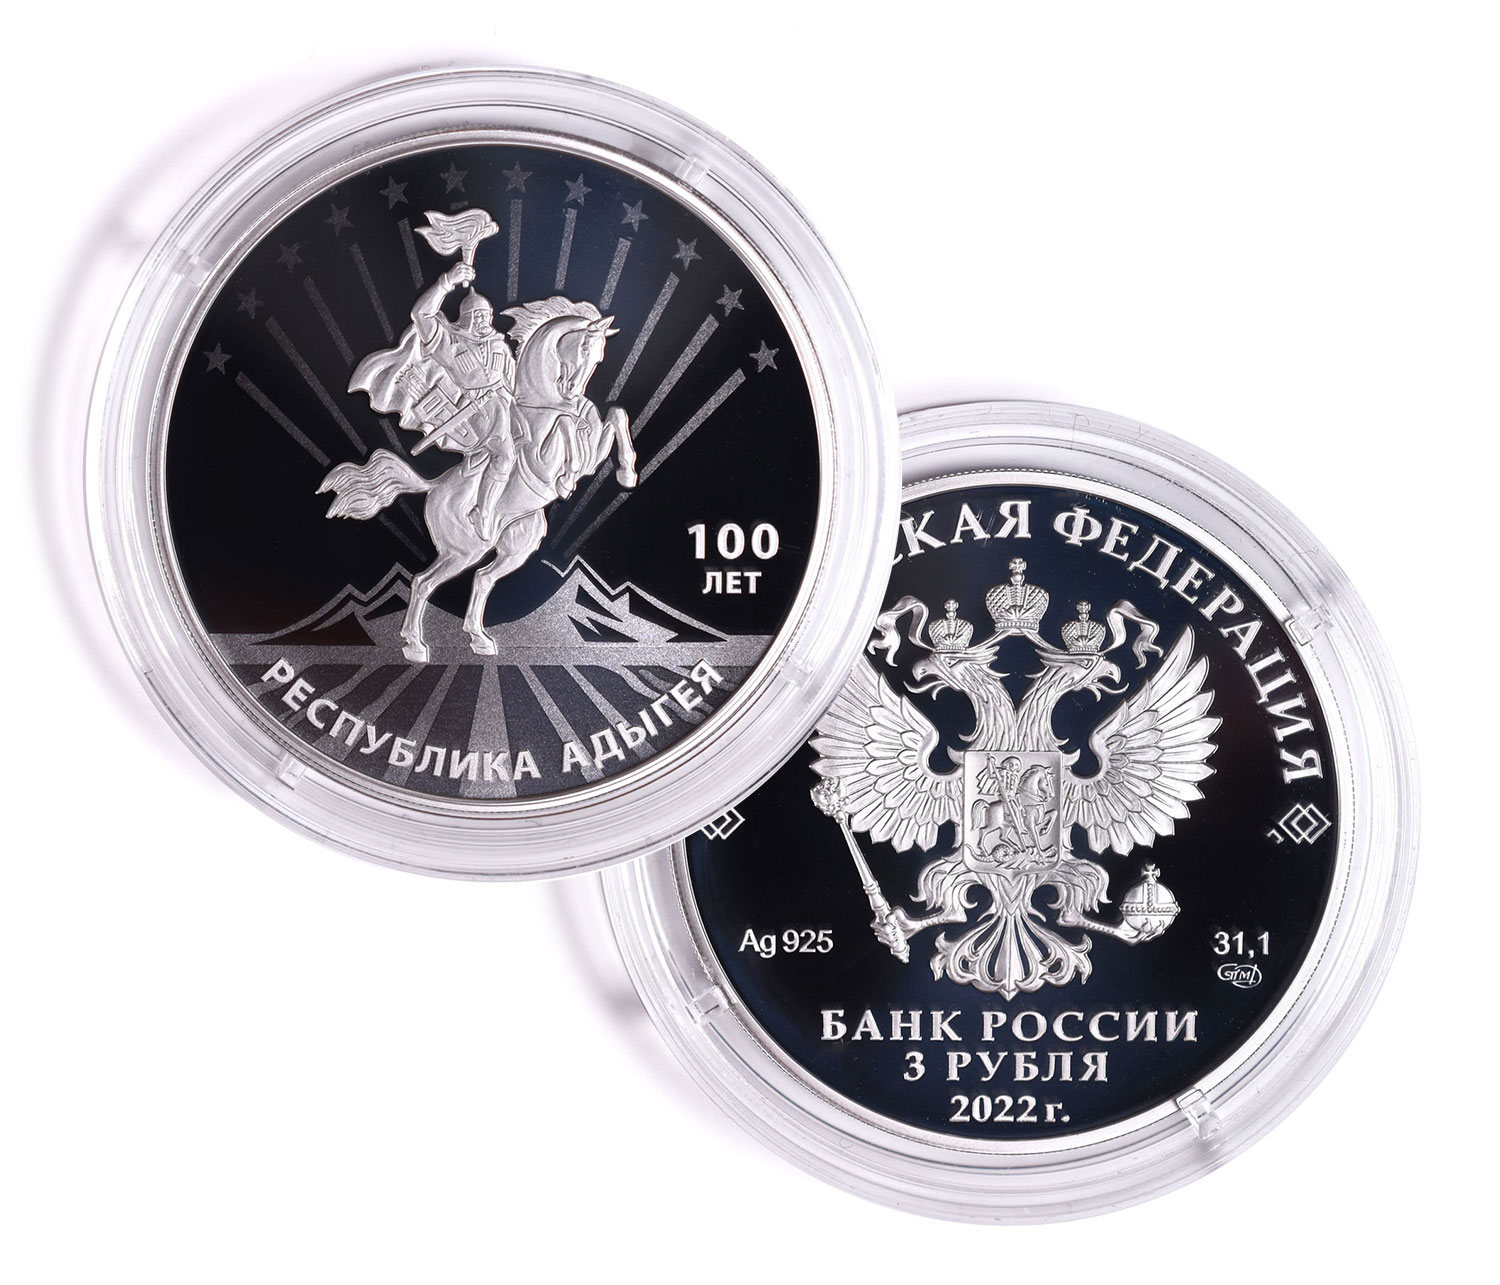 3 рубля 2022 - Республика Адыгея (монета)